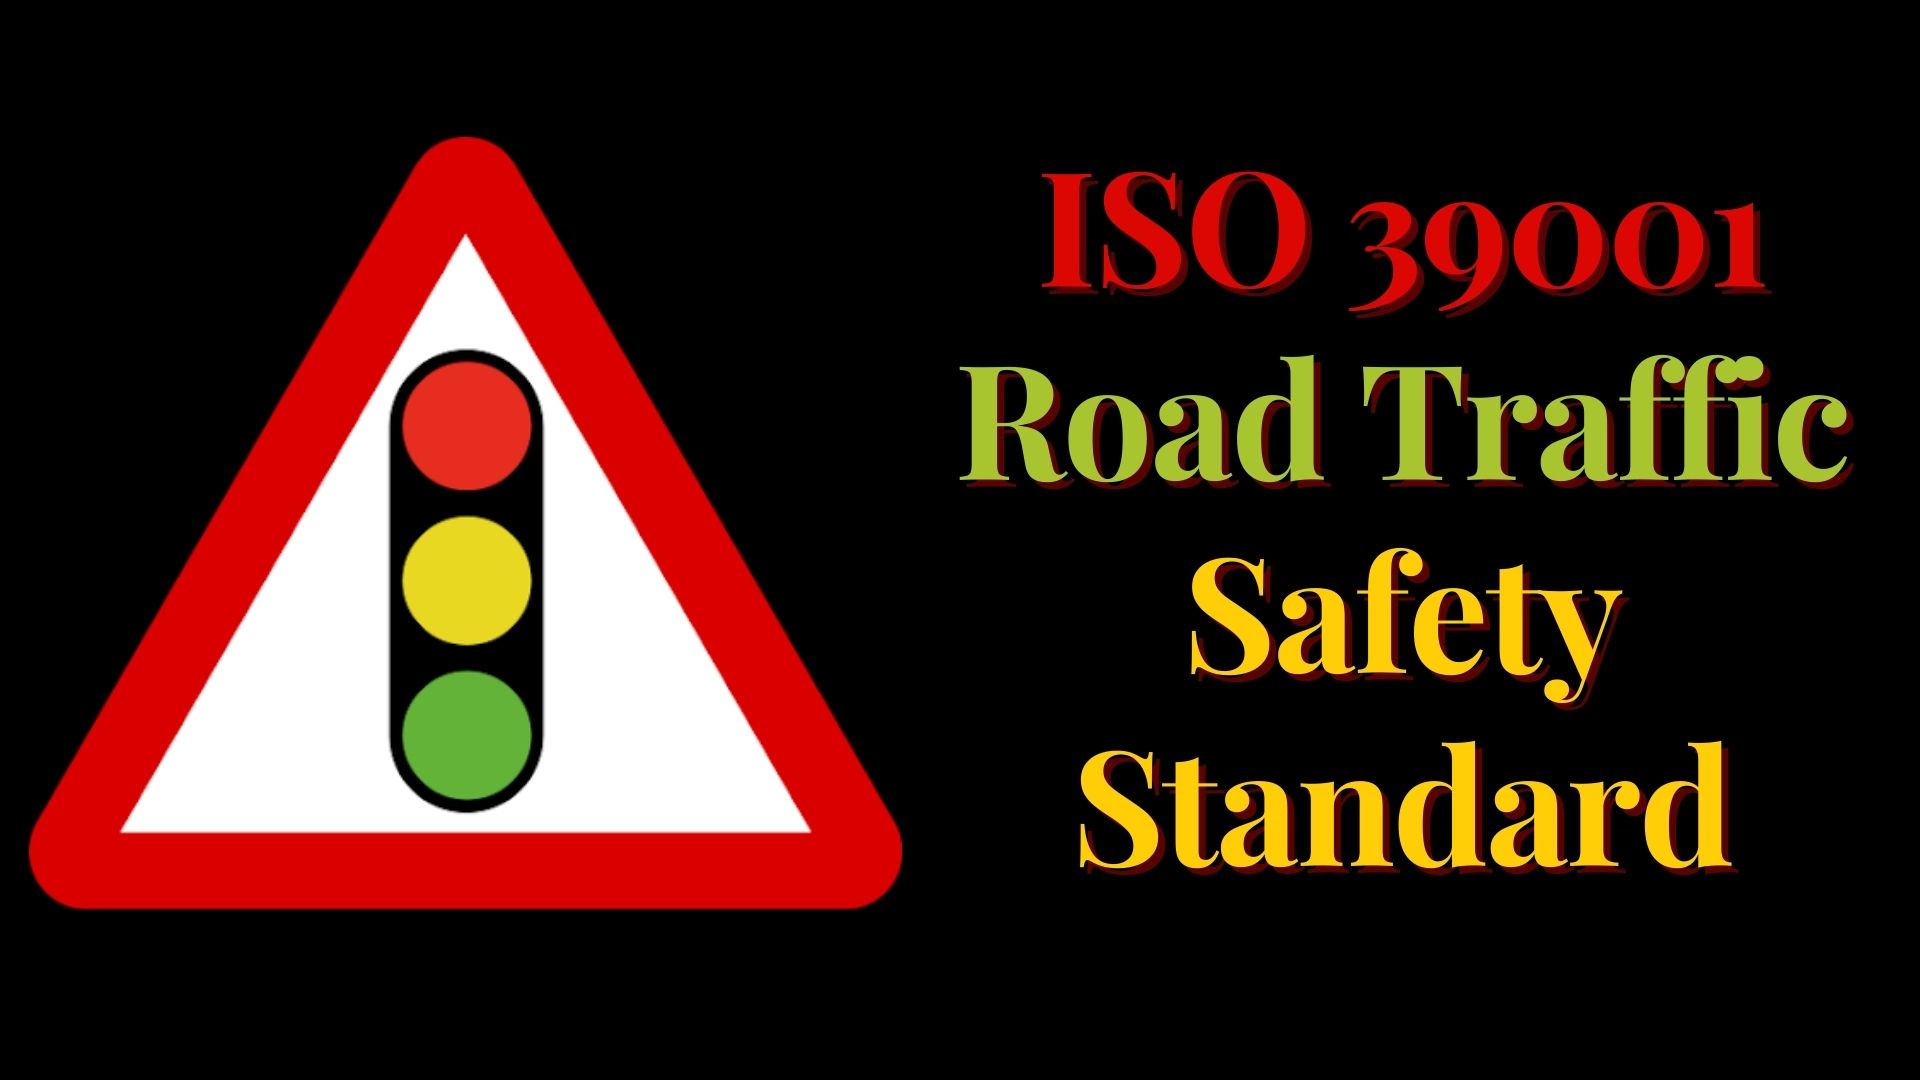 ISO 39001 Road Traffic Safety Standard | Raj Statup